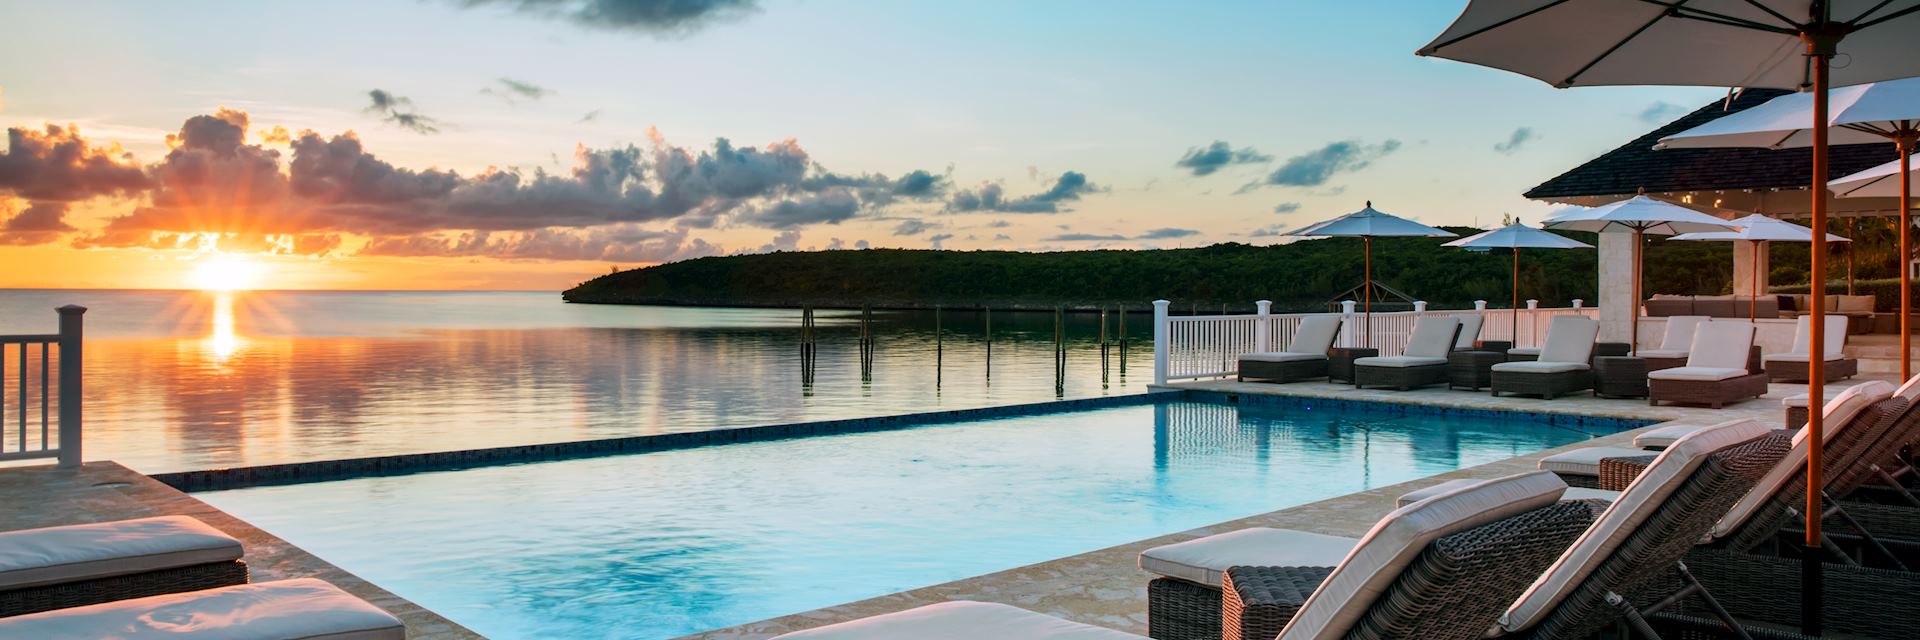 French Leave Resort, Bahamas